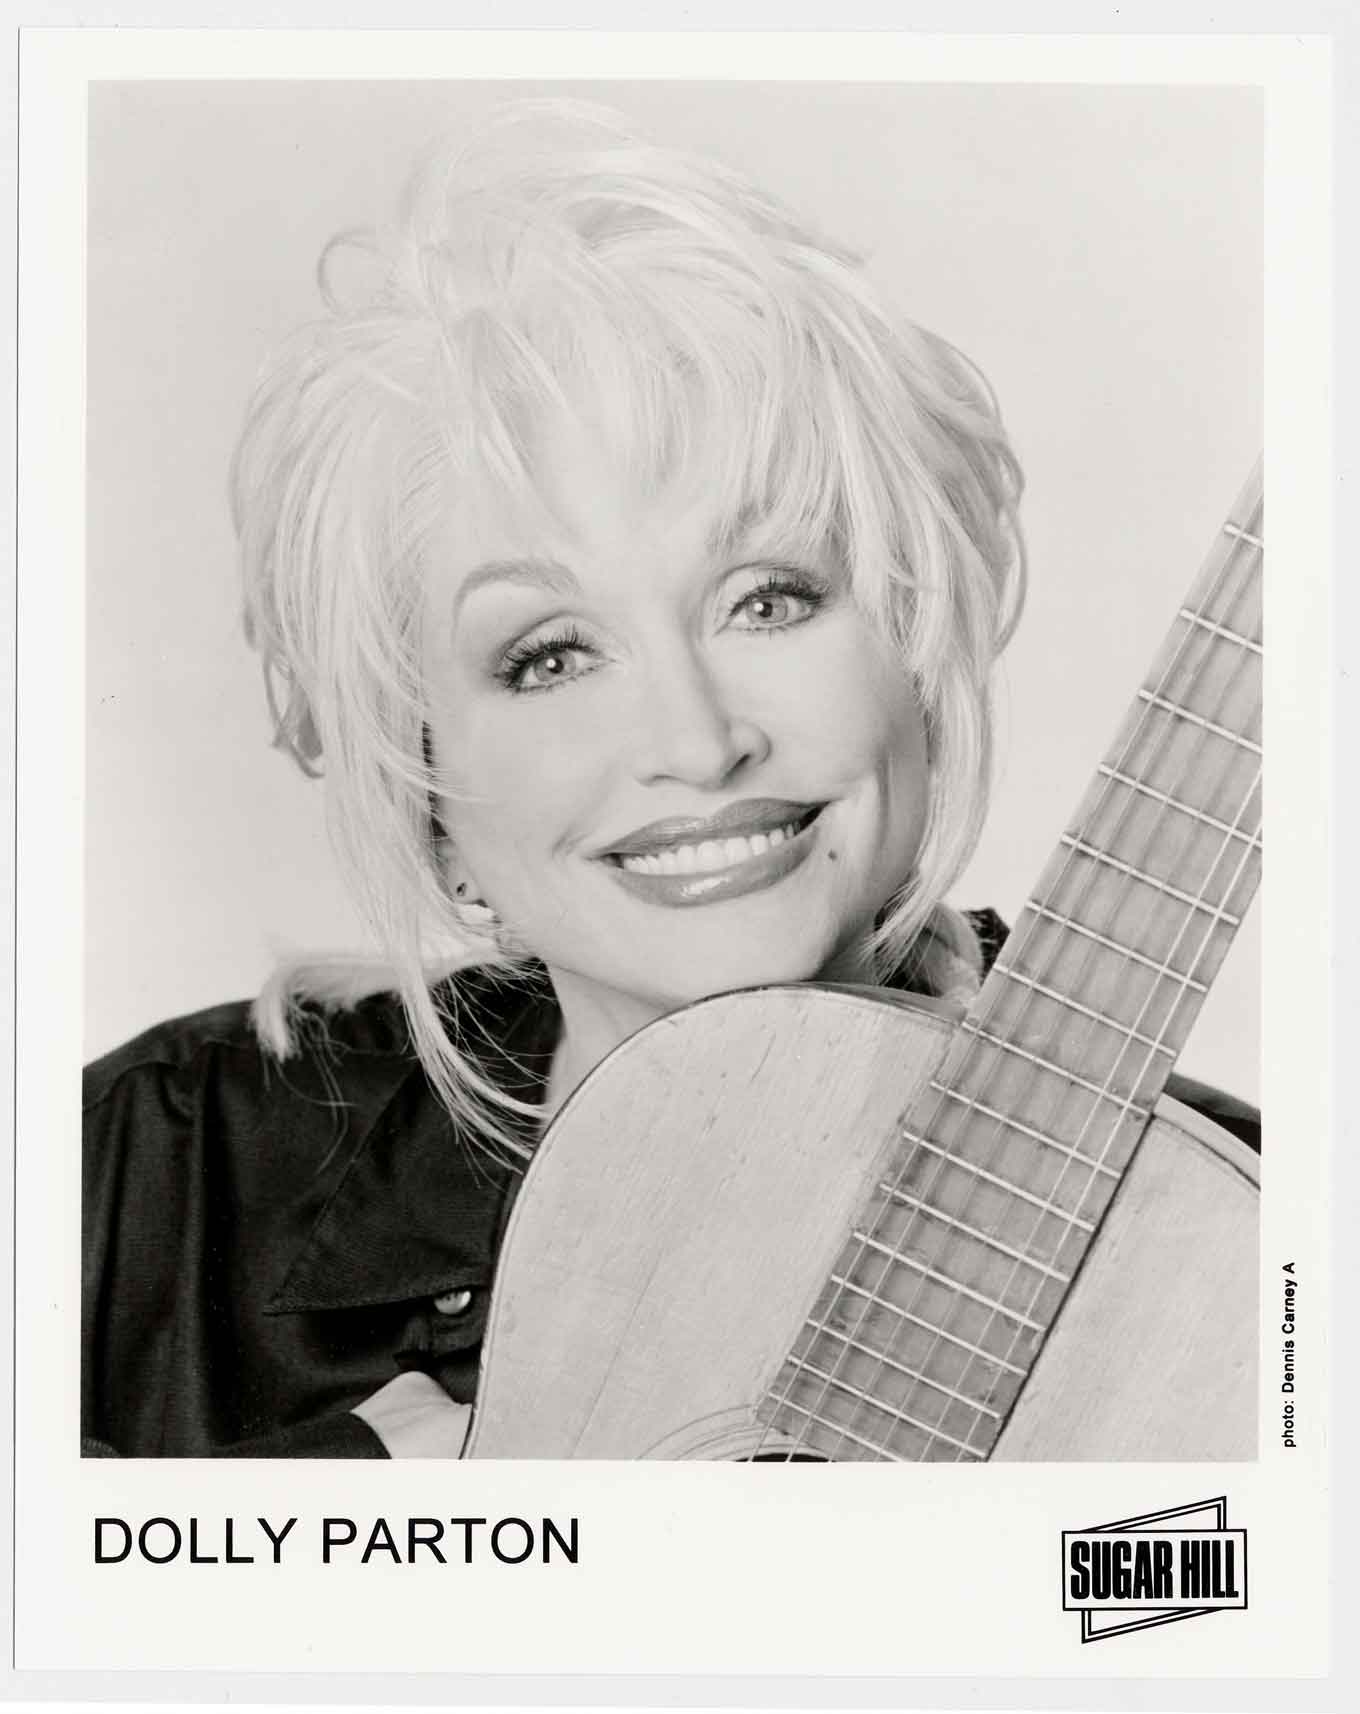 Dolly Parton portret, glimlachend met een gitaar